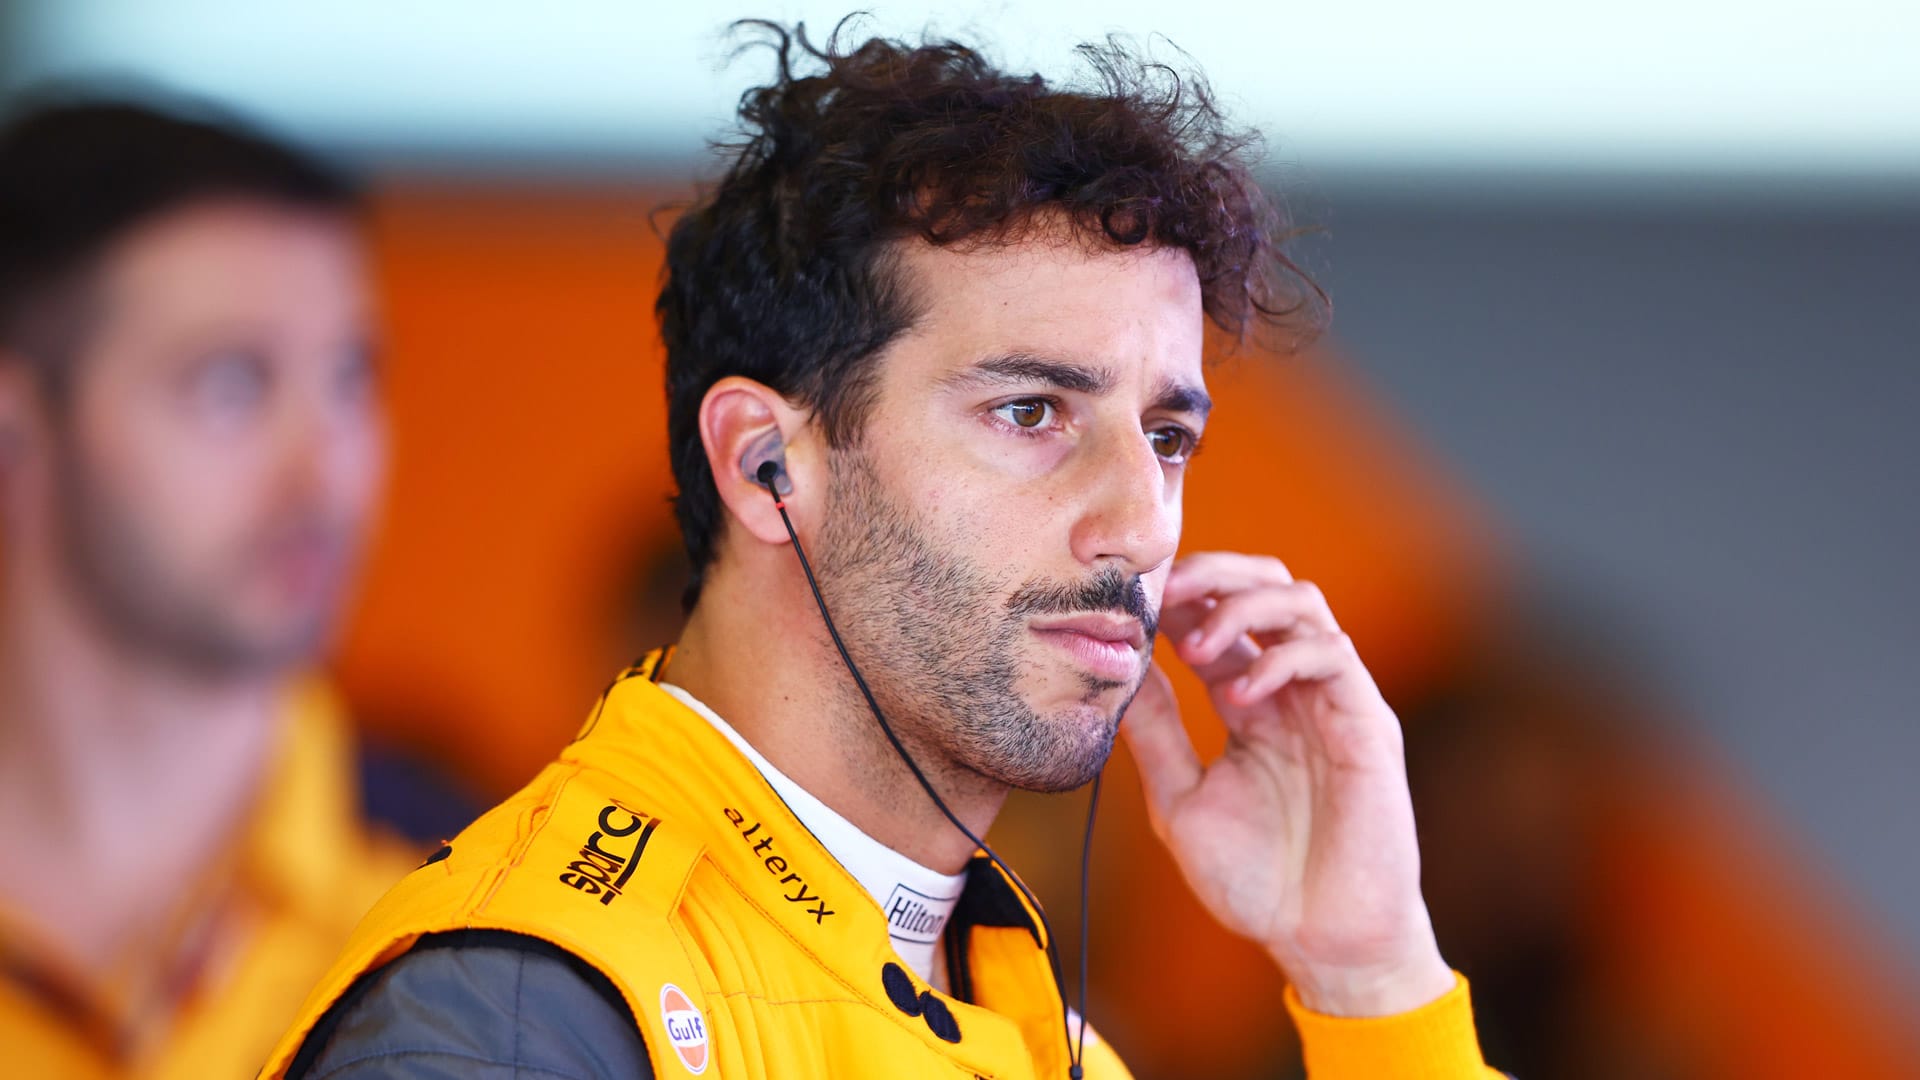 Lando Norris and Daniel Ricciardo Post Qualifying interview Abu